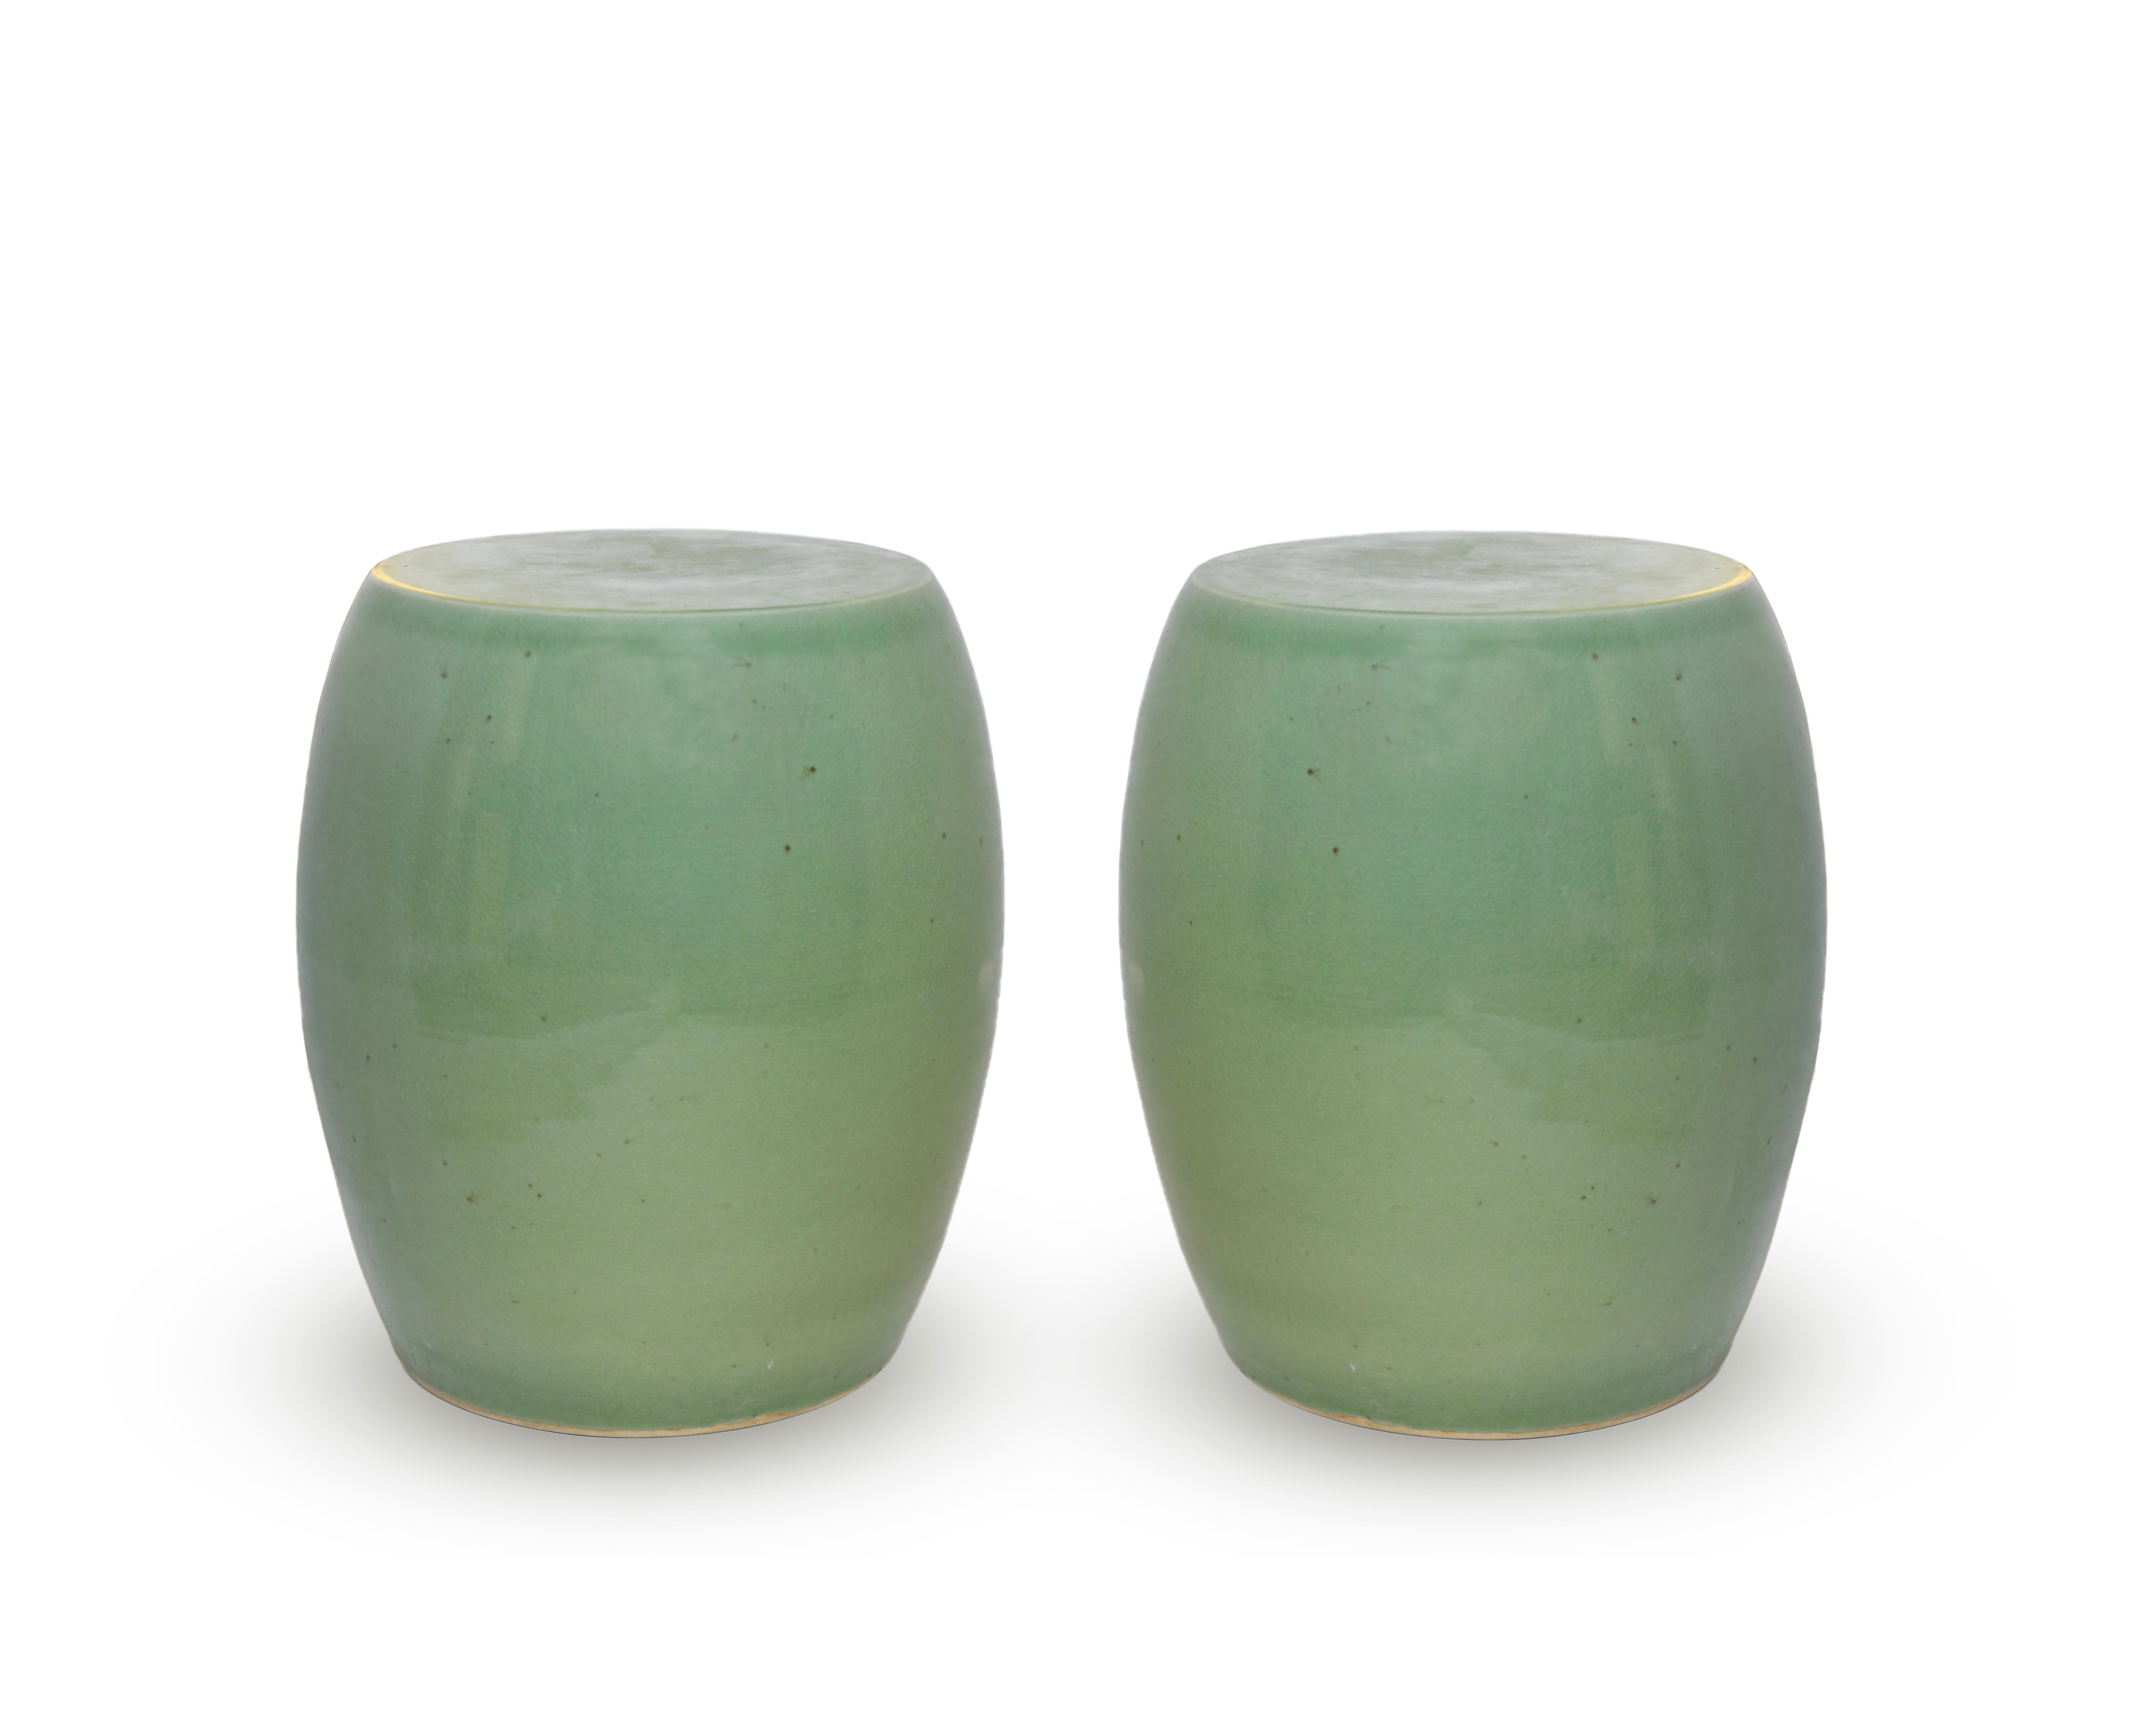 A pair of Celadon Glazed porcelain stools with hair cracks under glaze detail.